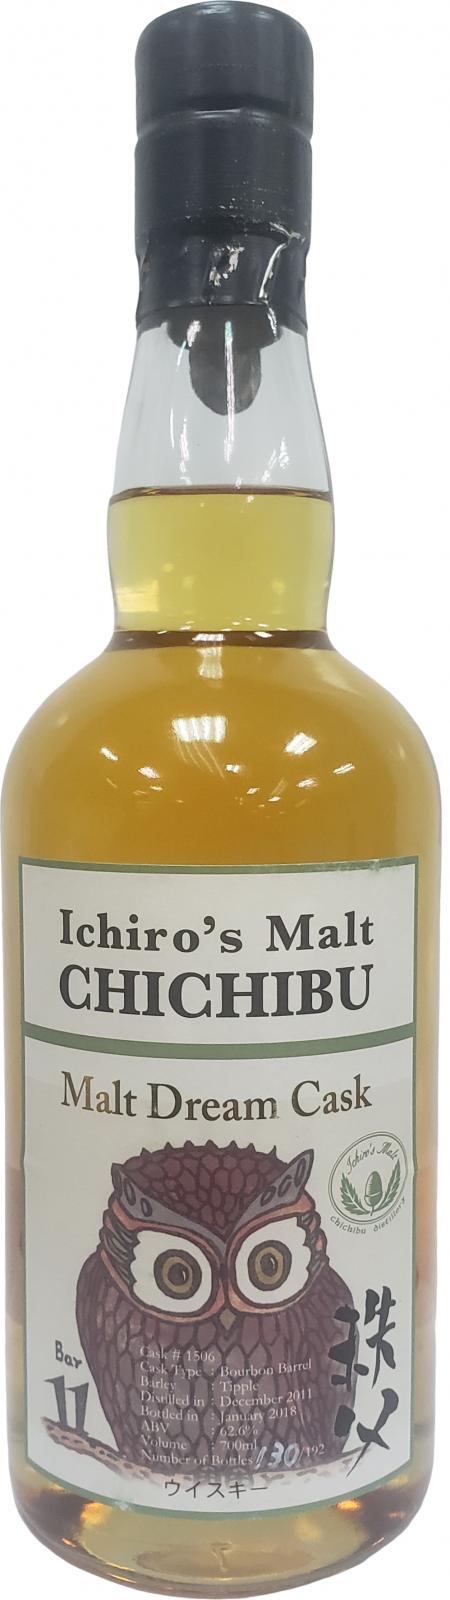 Chichibu 2011 Malt Dream Cask Bourbon barrel #1506 62.6% 700ml